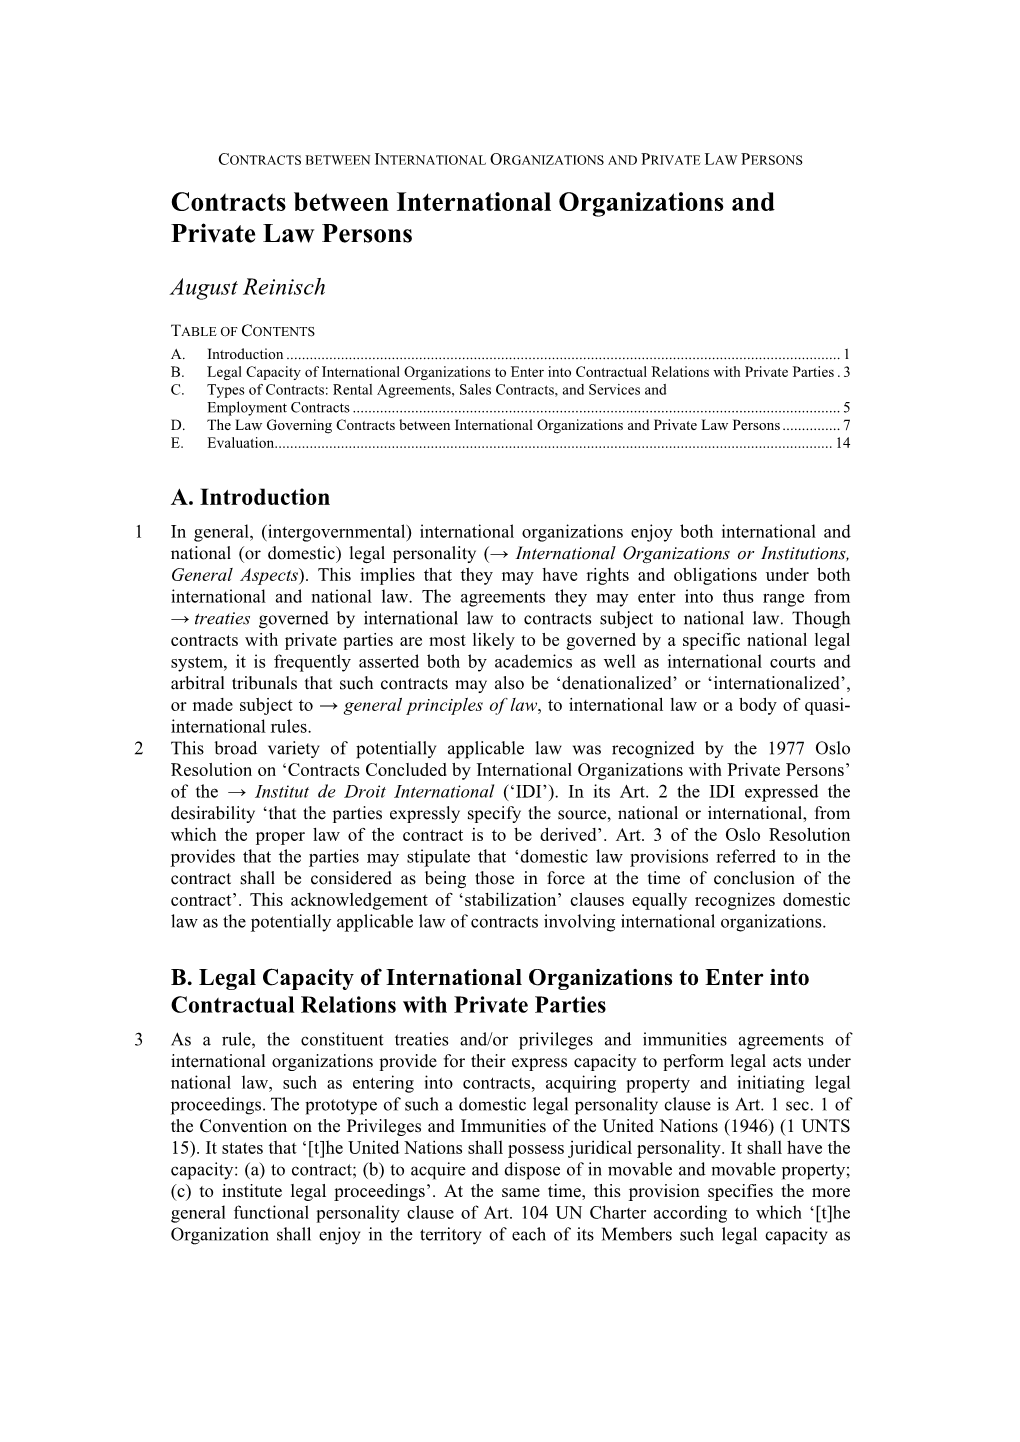 CONTRACTS BETWEEN INTERNATIONAL ORGANIZATIONS and PRIVATE LAW PERSONS Contracts Between International Organizations and Private Law Persons